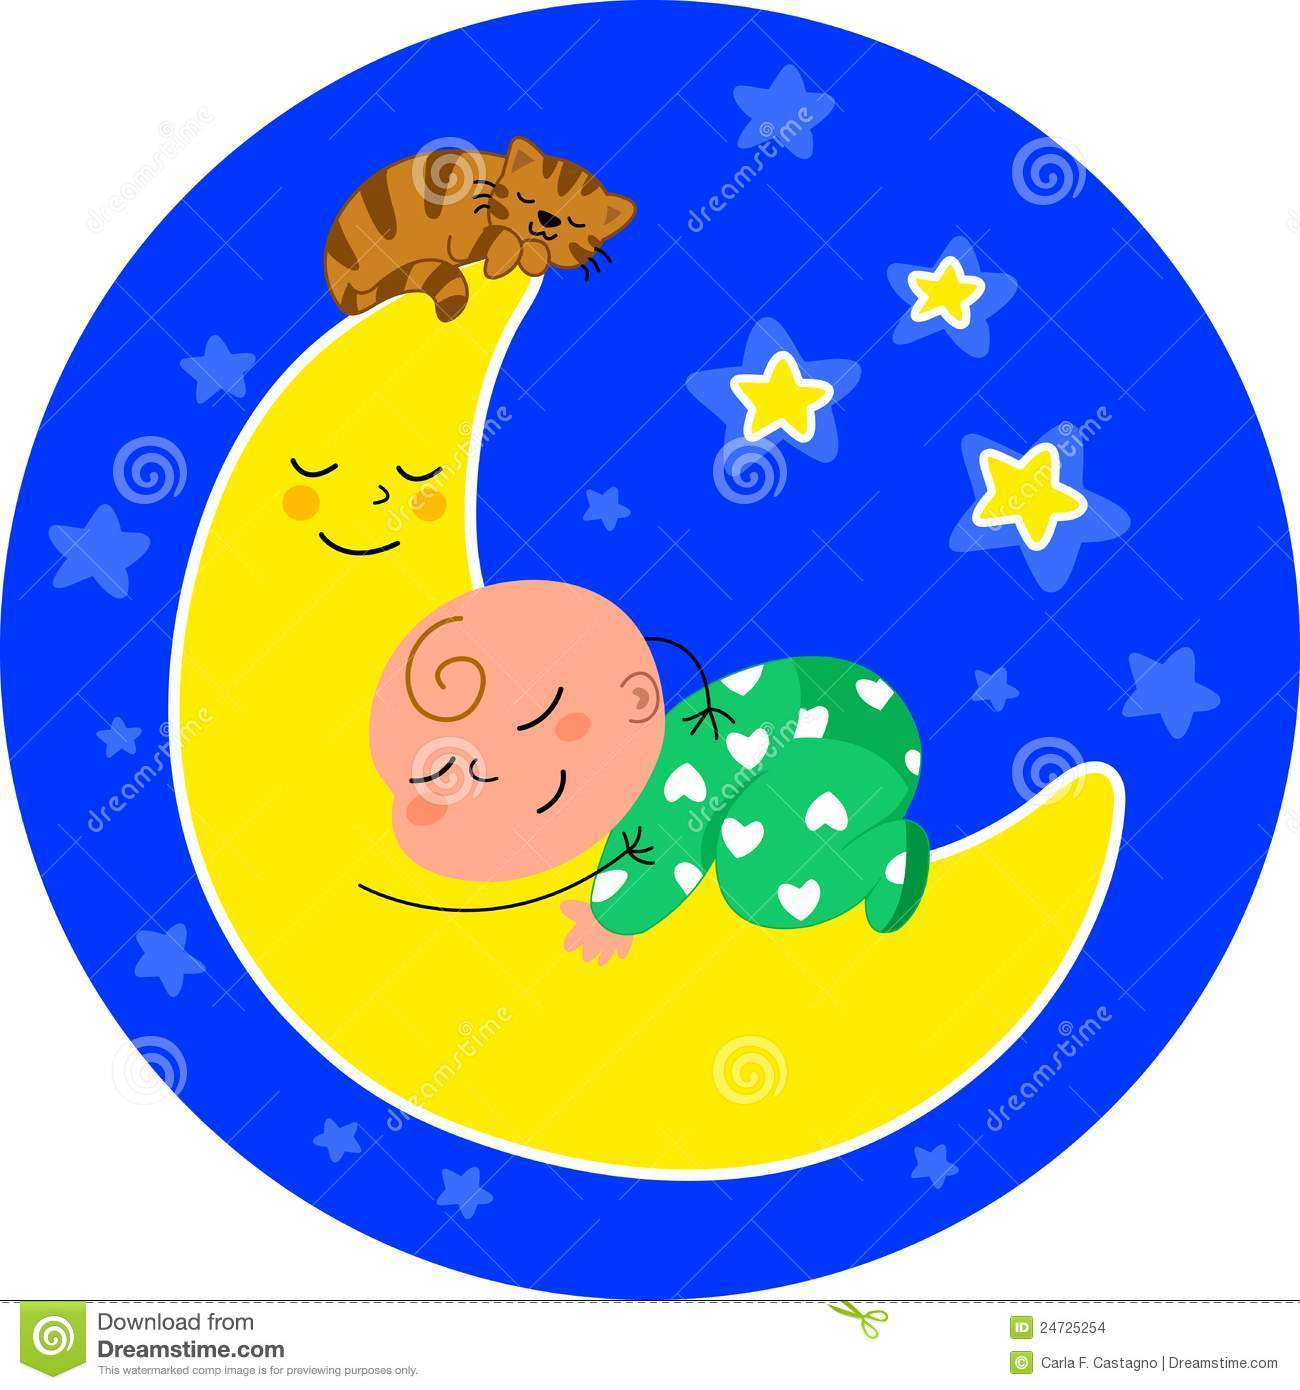 Cute Baby Sleeping On The Moon With Little Cat  Cartoon Illustration